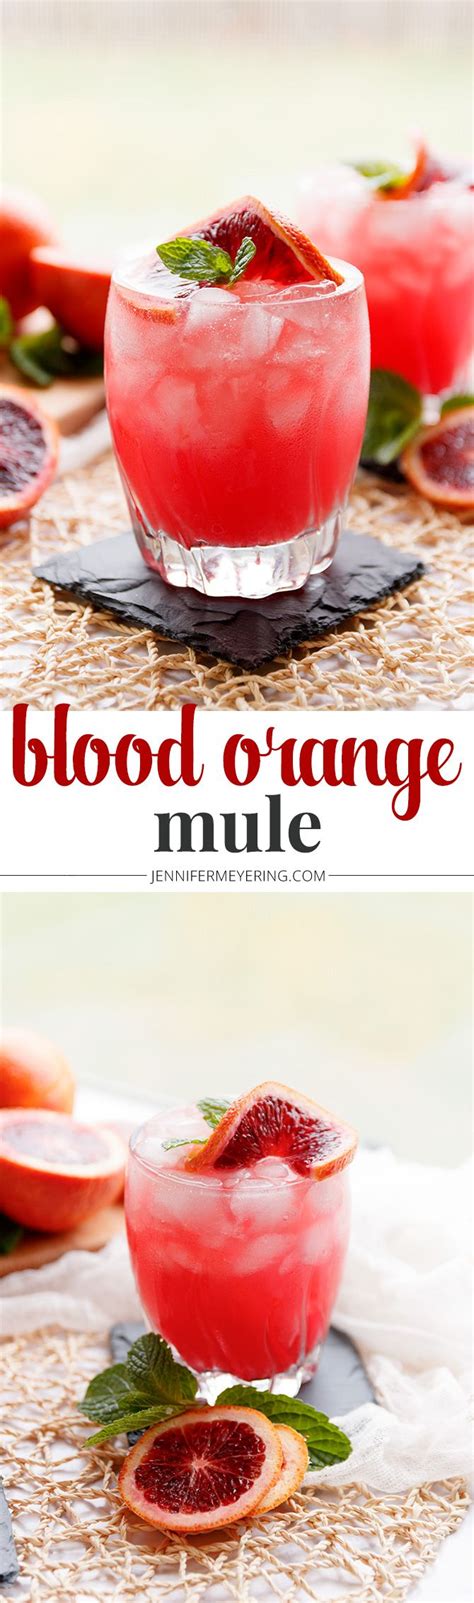 Blood Orange Mule Delicious Drink Recipes